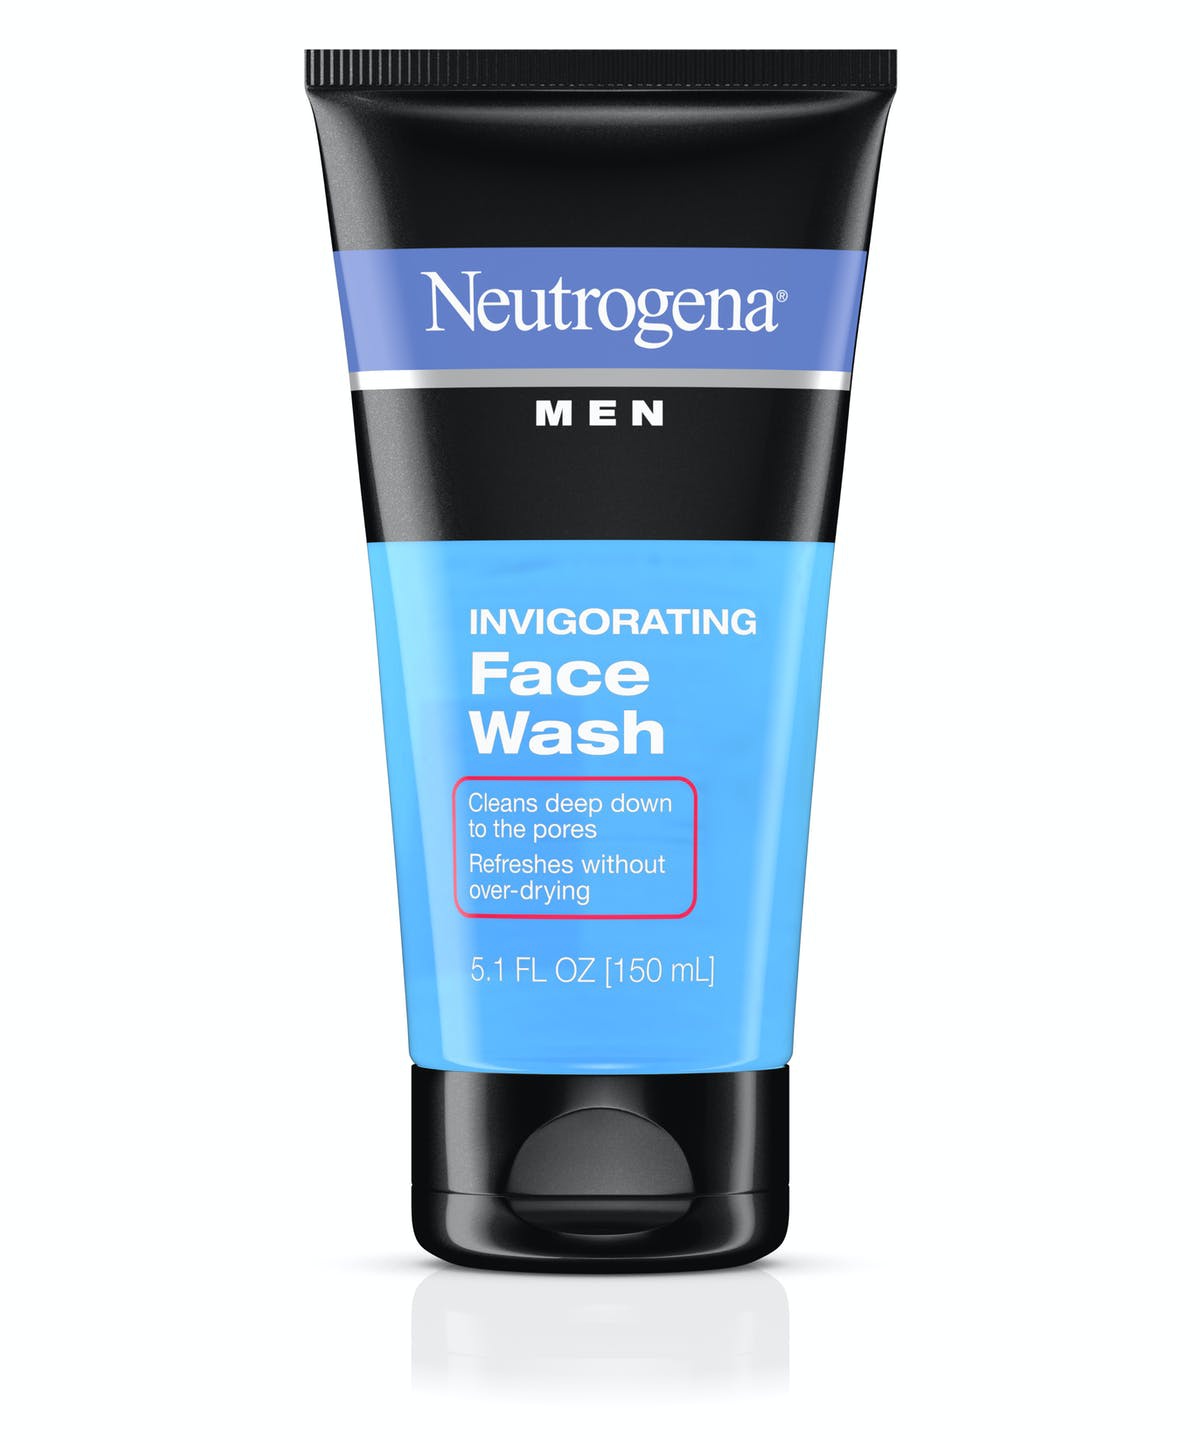 Neutrogena Men’s Invigorating Face Wash